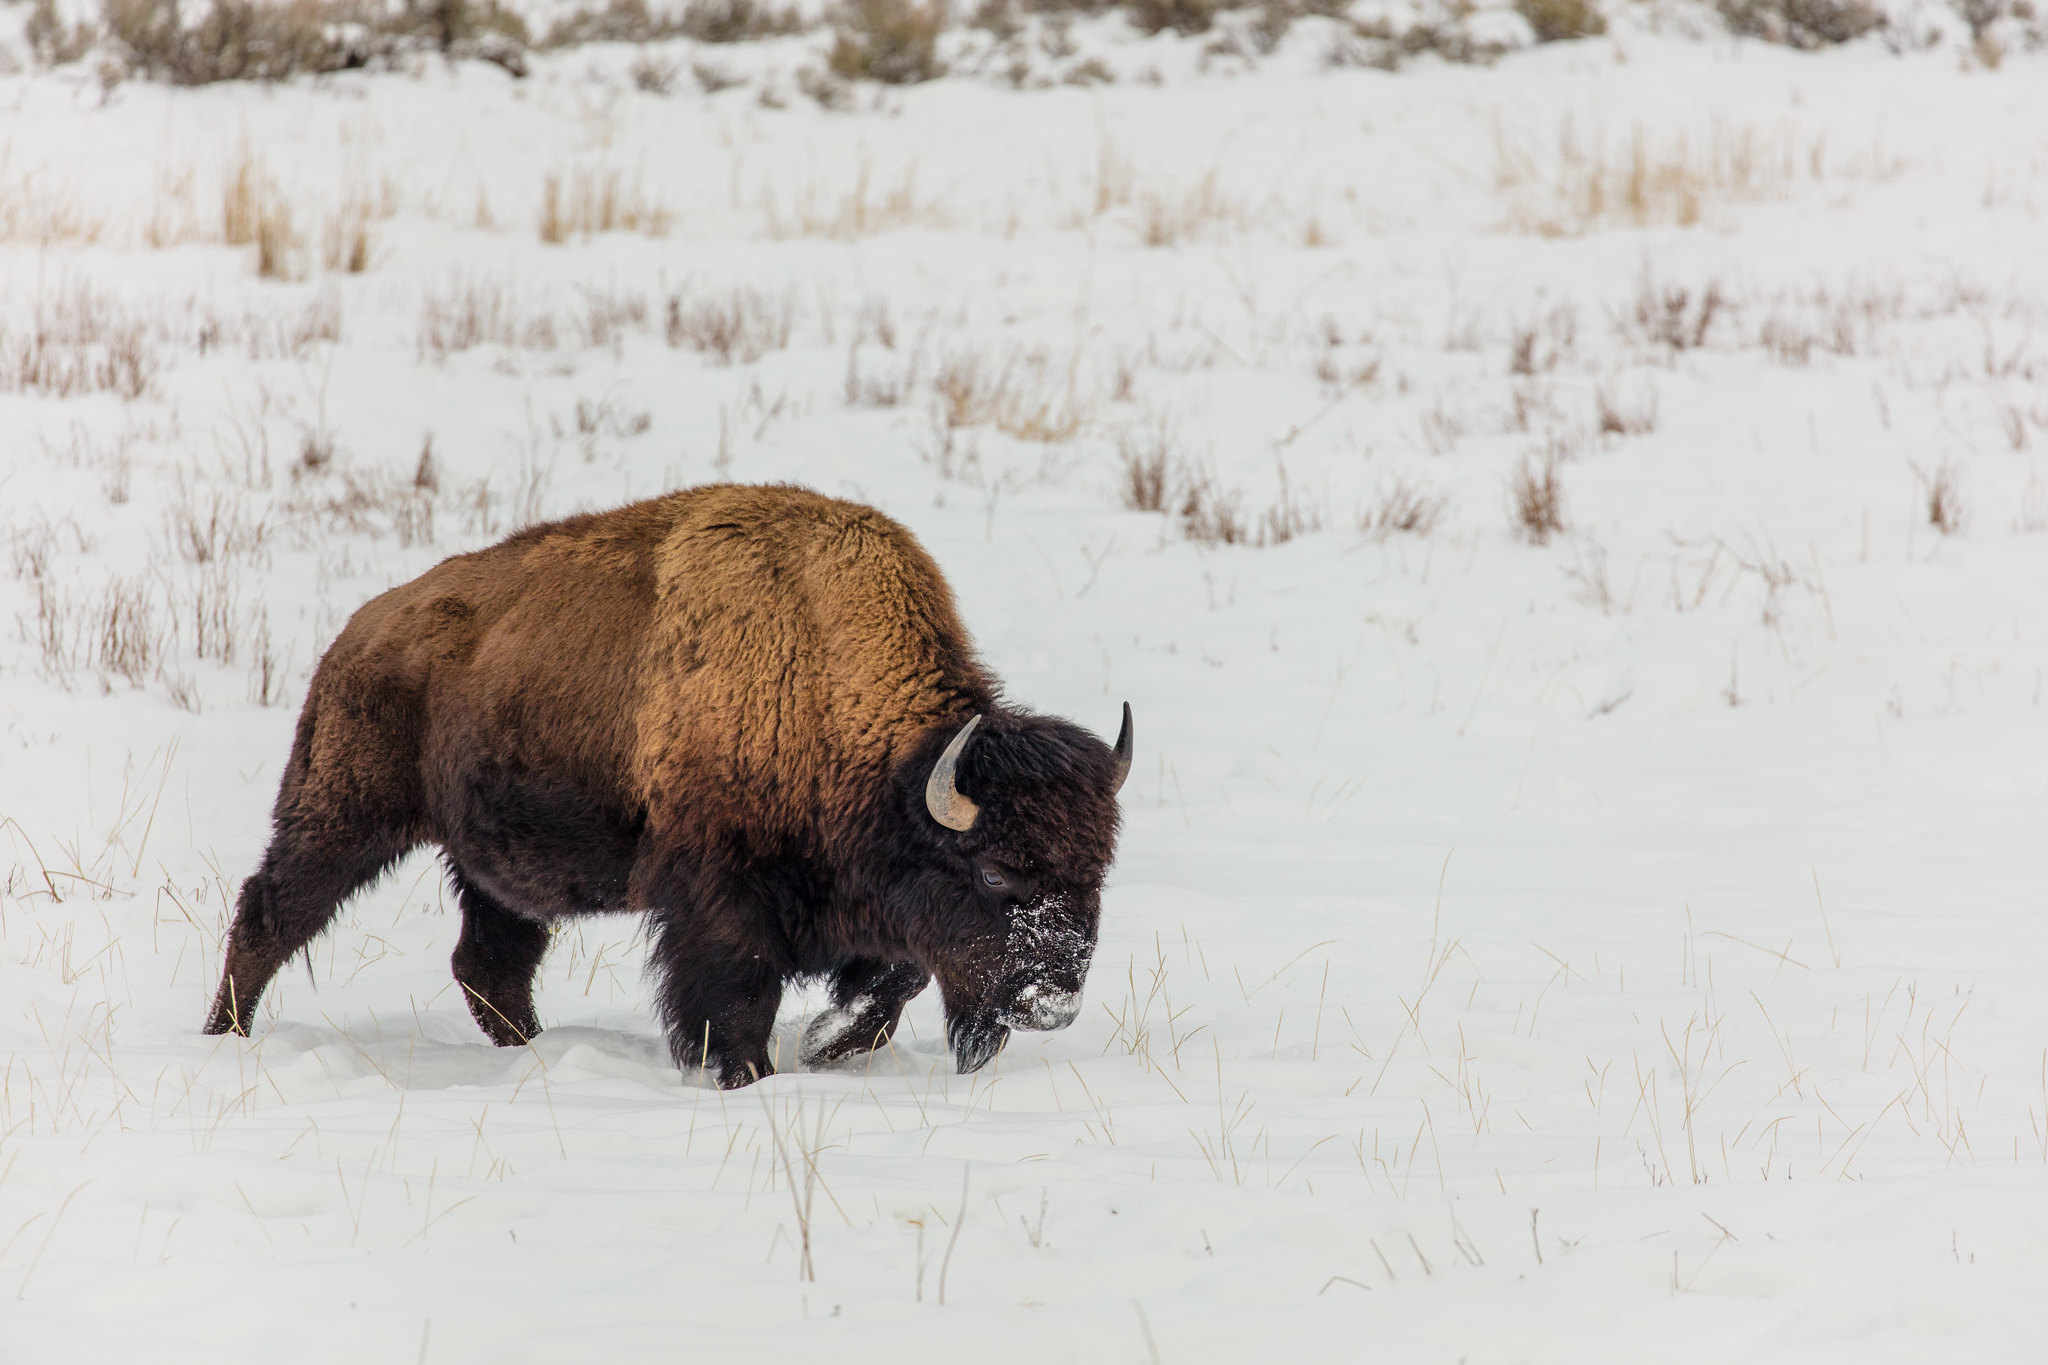 Bison walks through snow in Yellowstone National Park